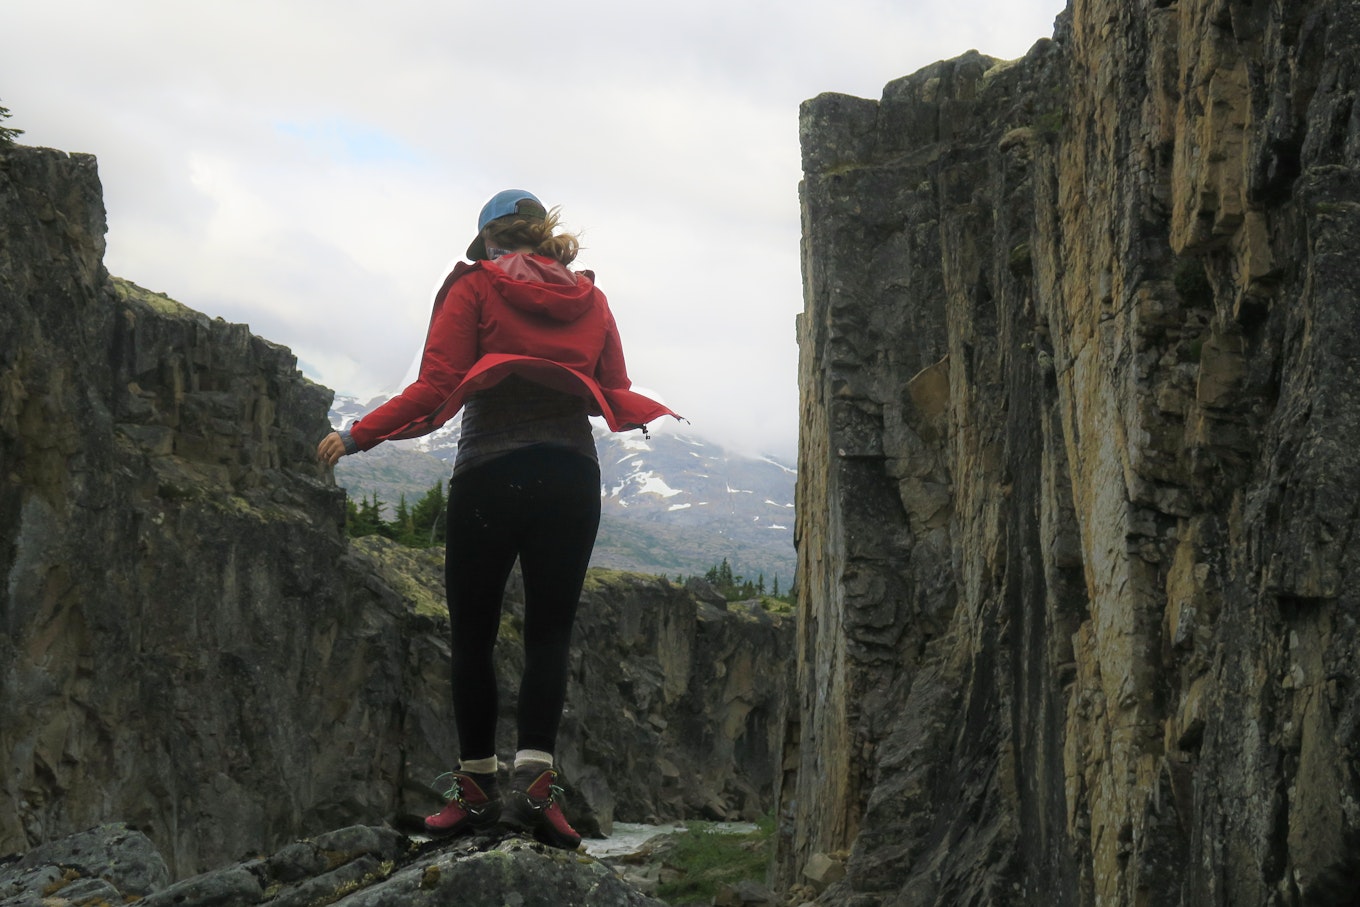 Outbound Women's Granite Peak Mid-Cut Waterproof Hiking Boots, Charcoal